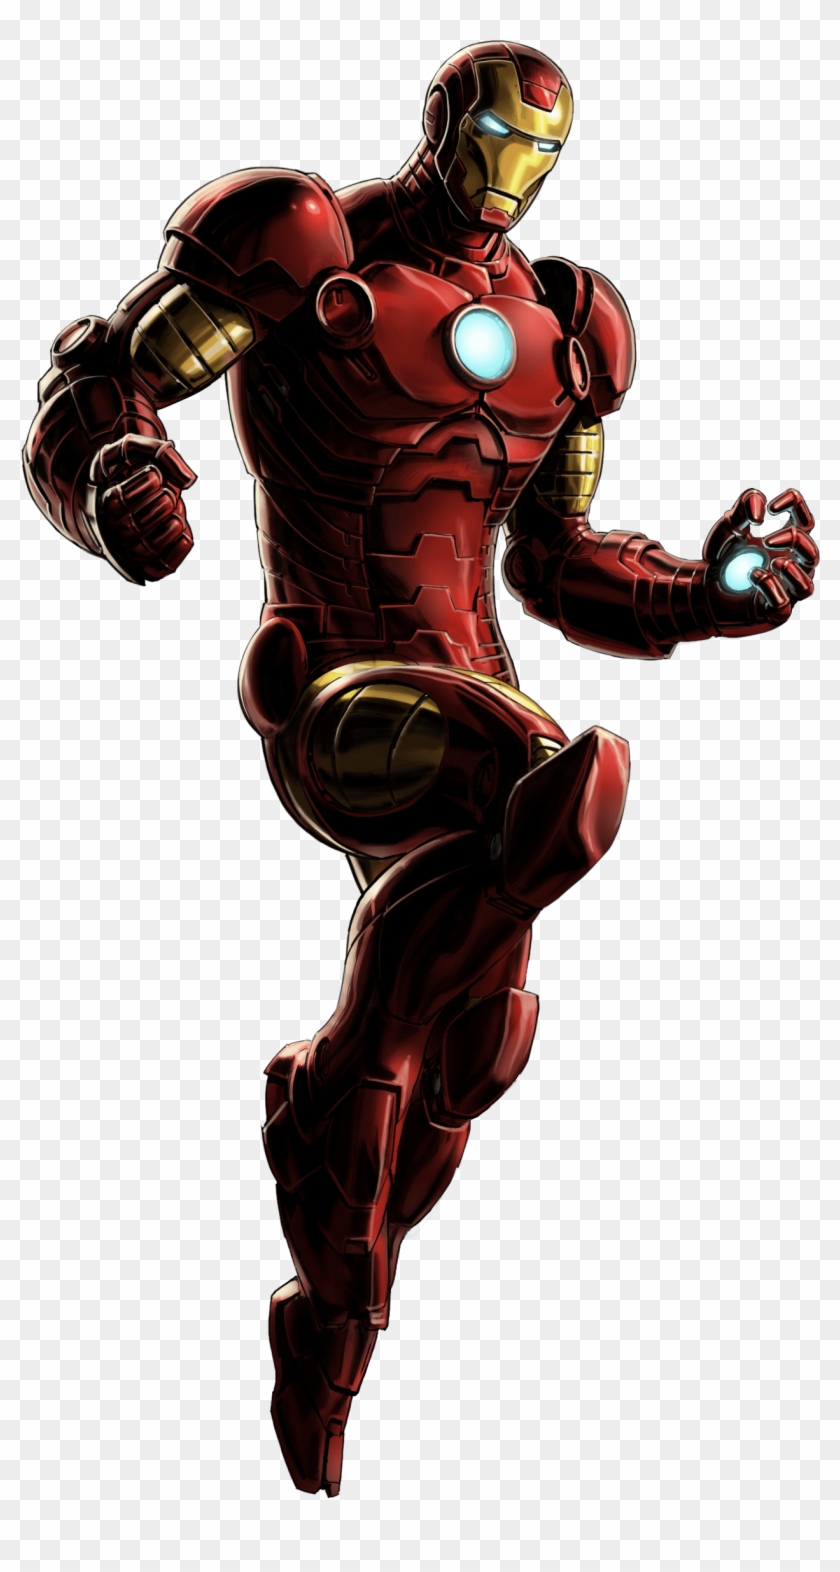 Marvel Iron Man Avengers Armor Clipart #2233933